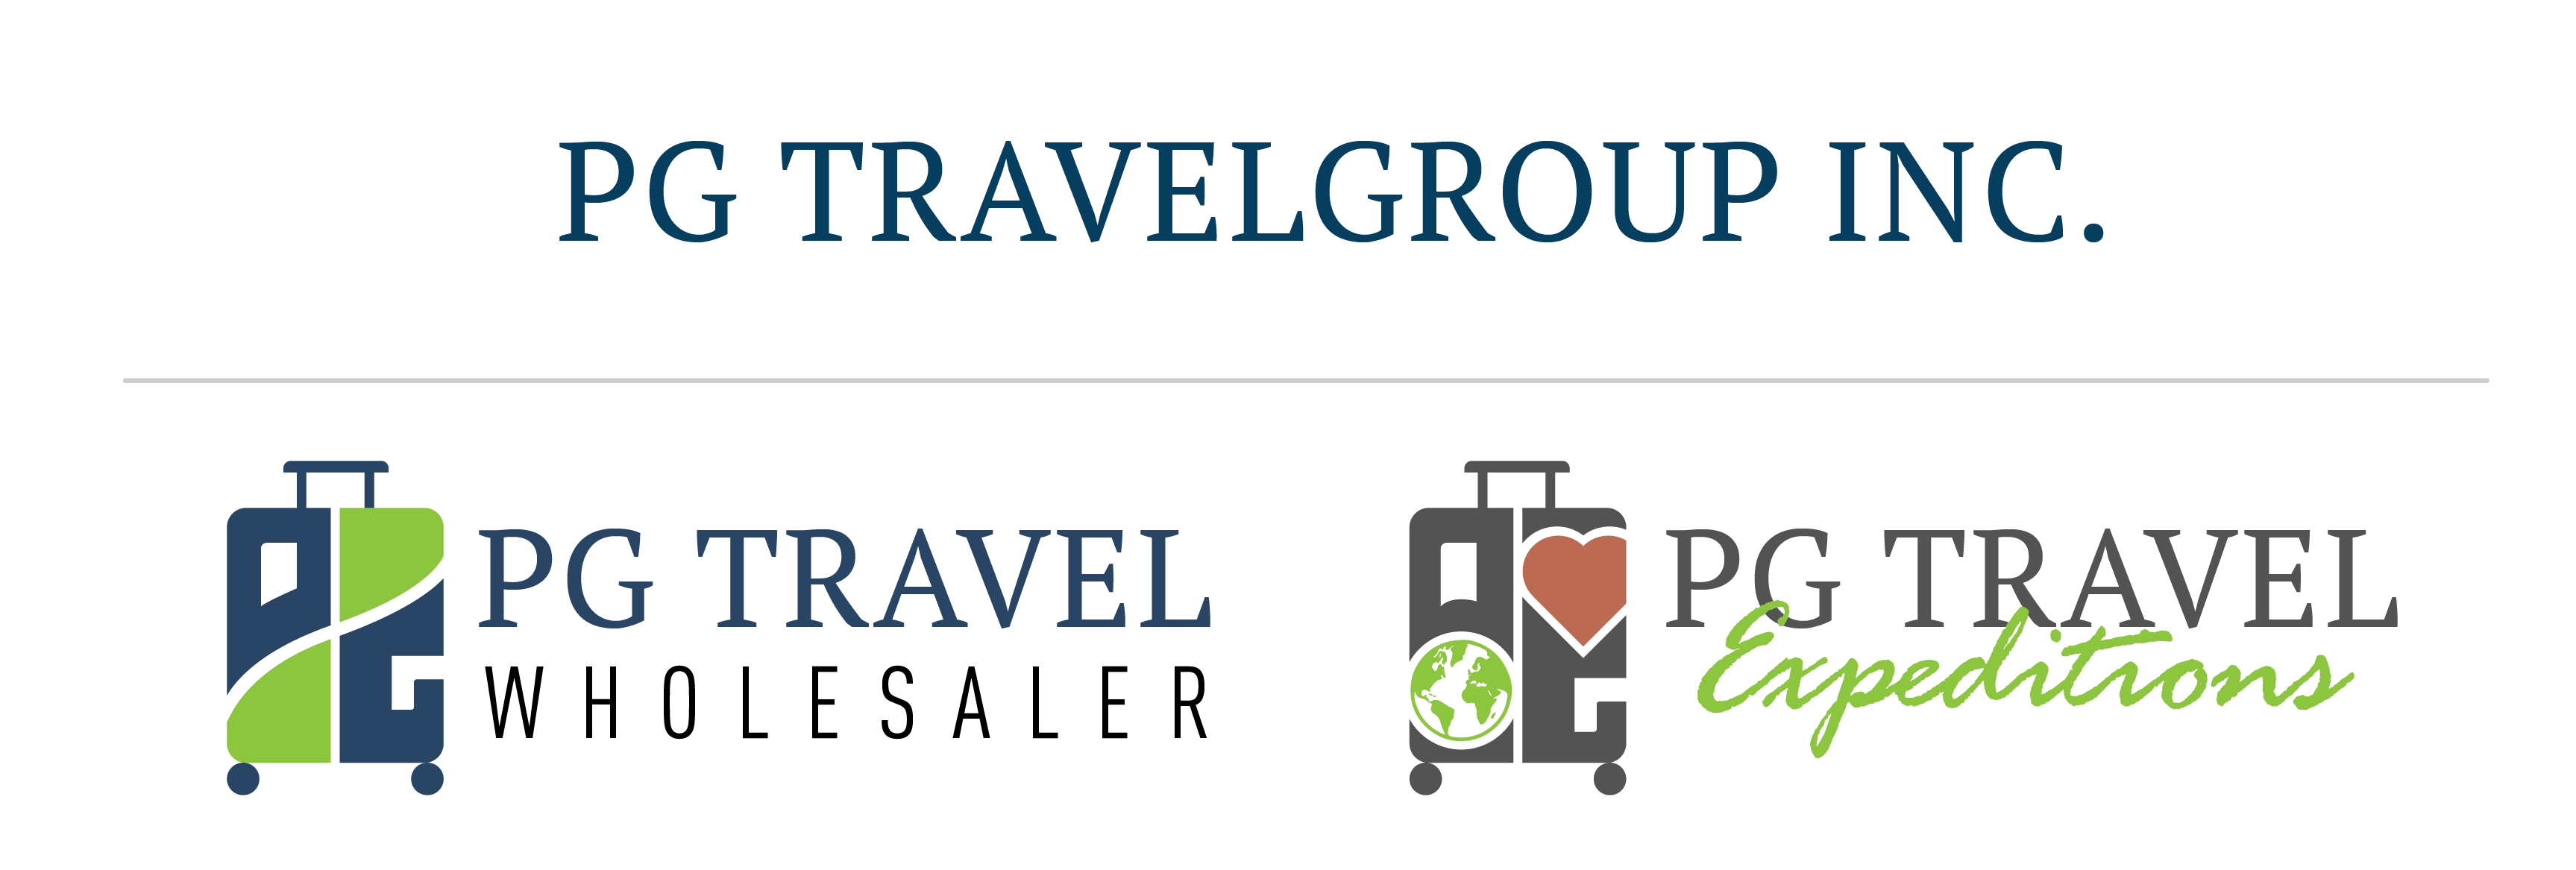 pg travel group